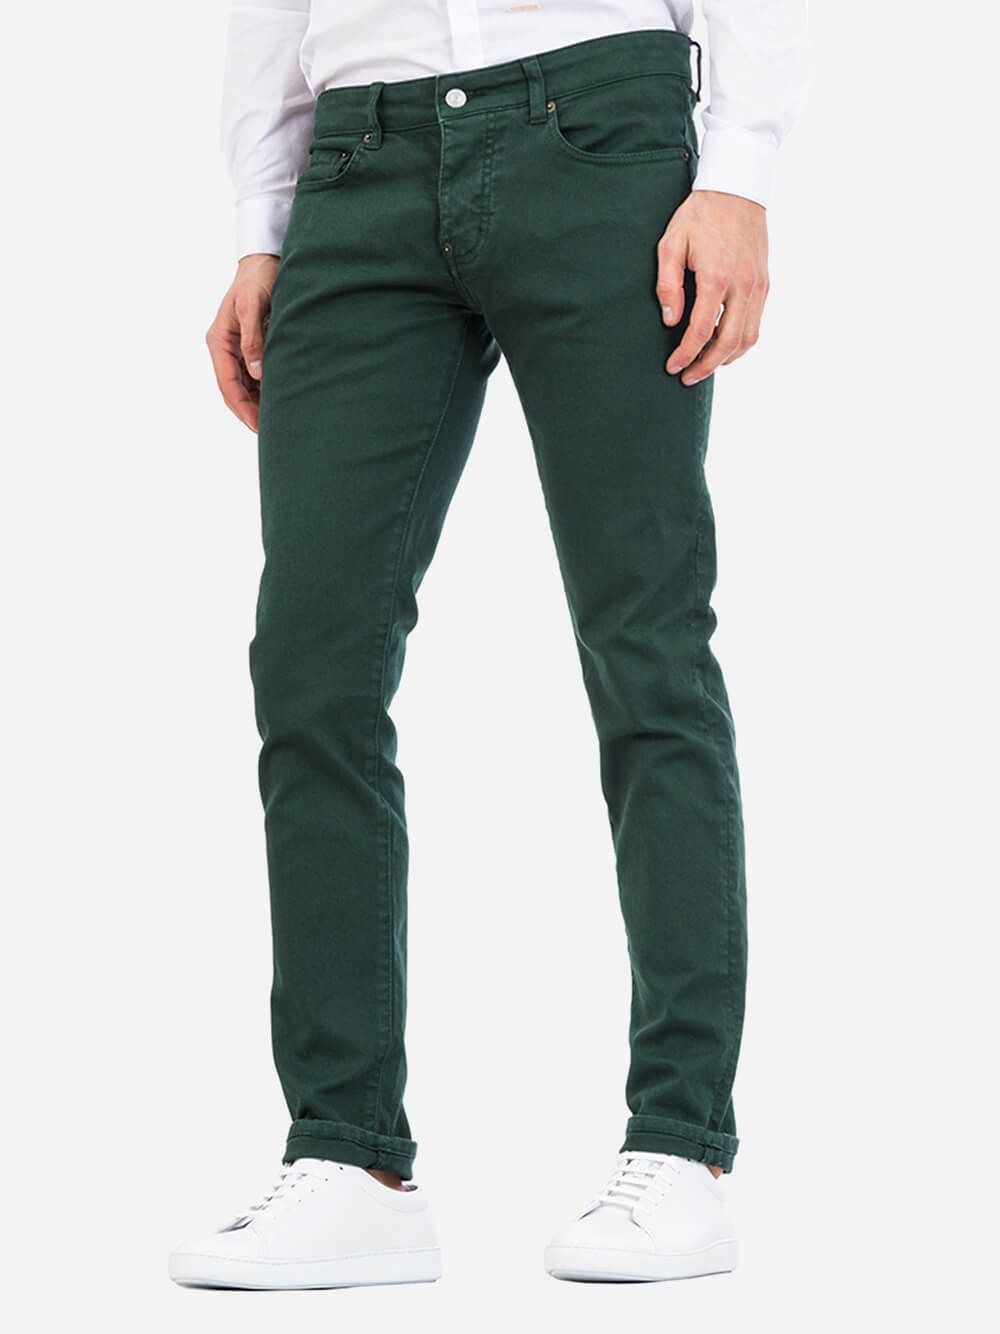 Gentleman Green Jeans | Inimigo Clothing